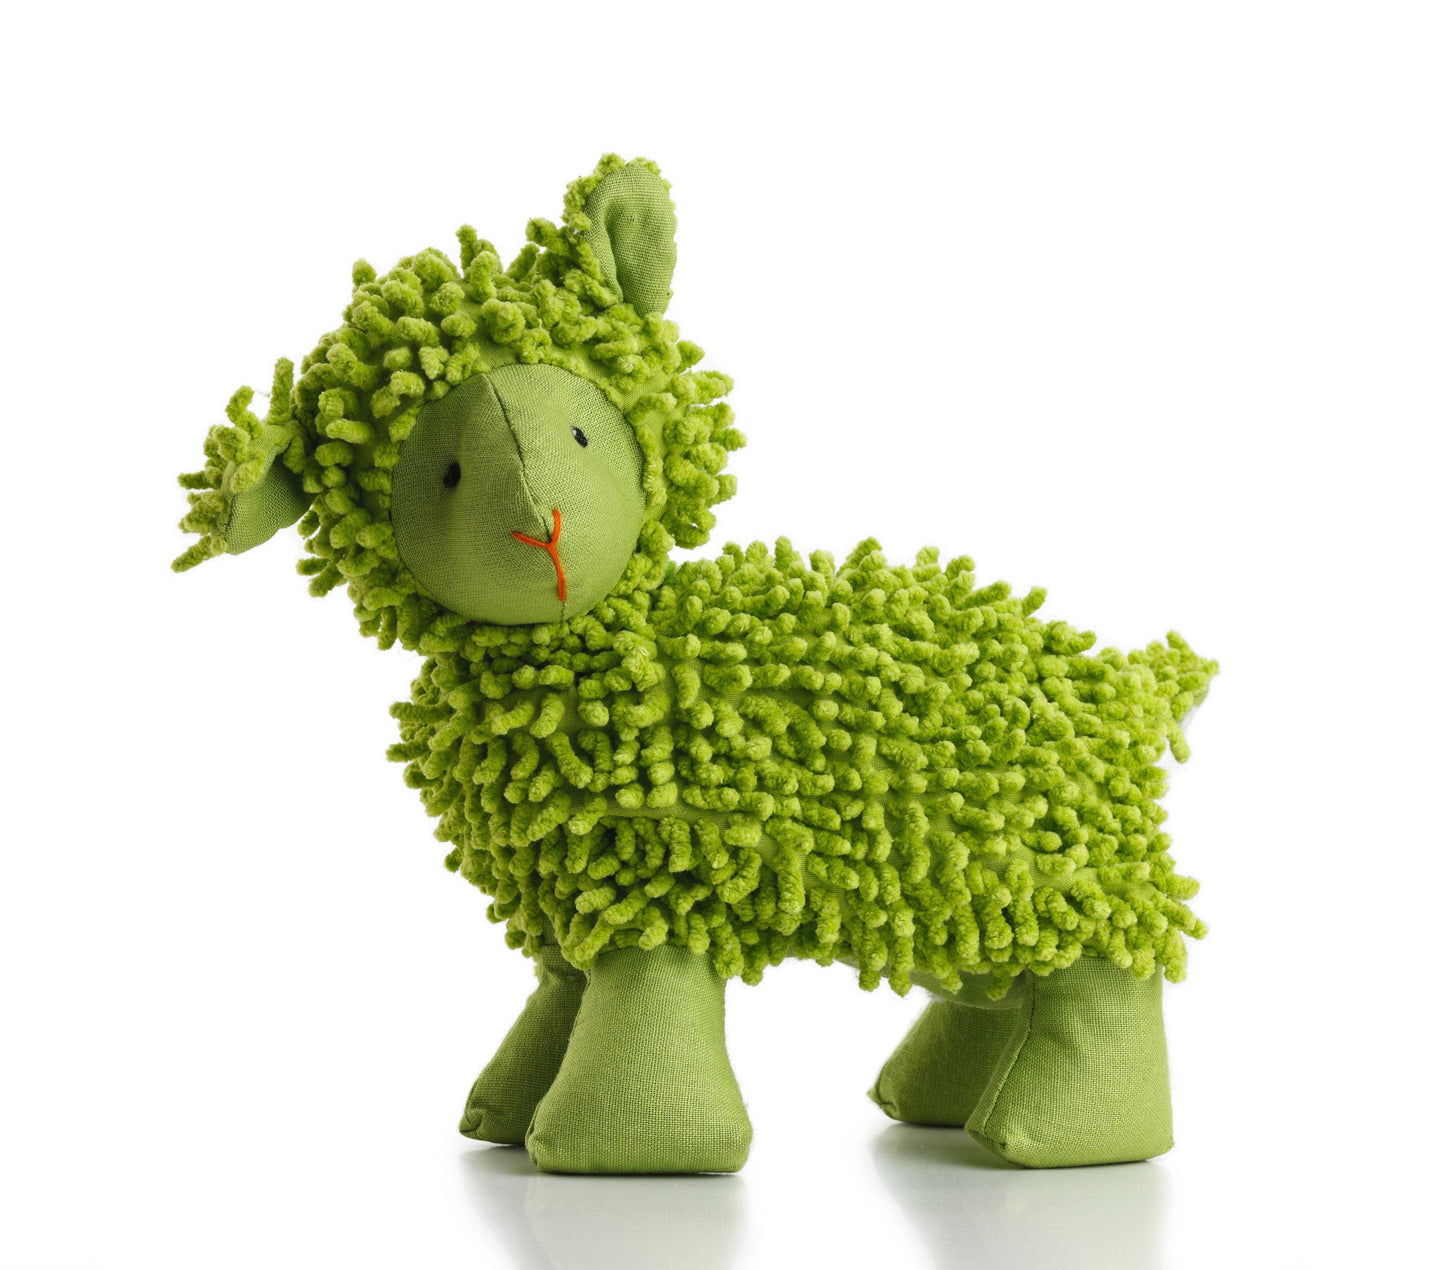 Celadon Celery Green Merino Wool Roving